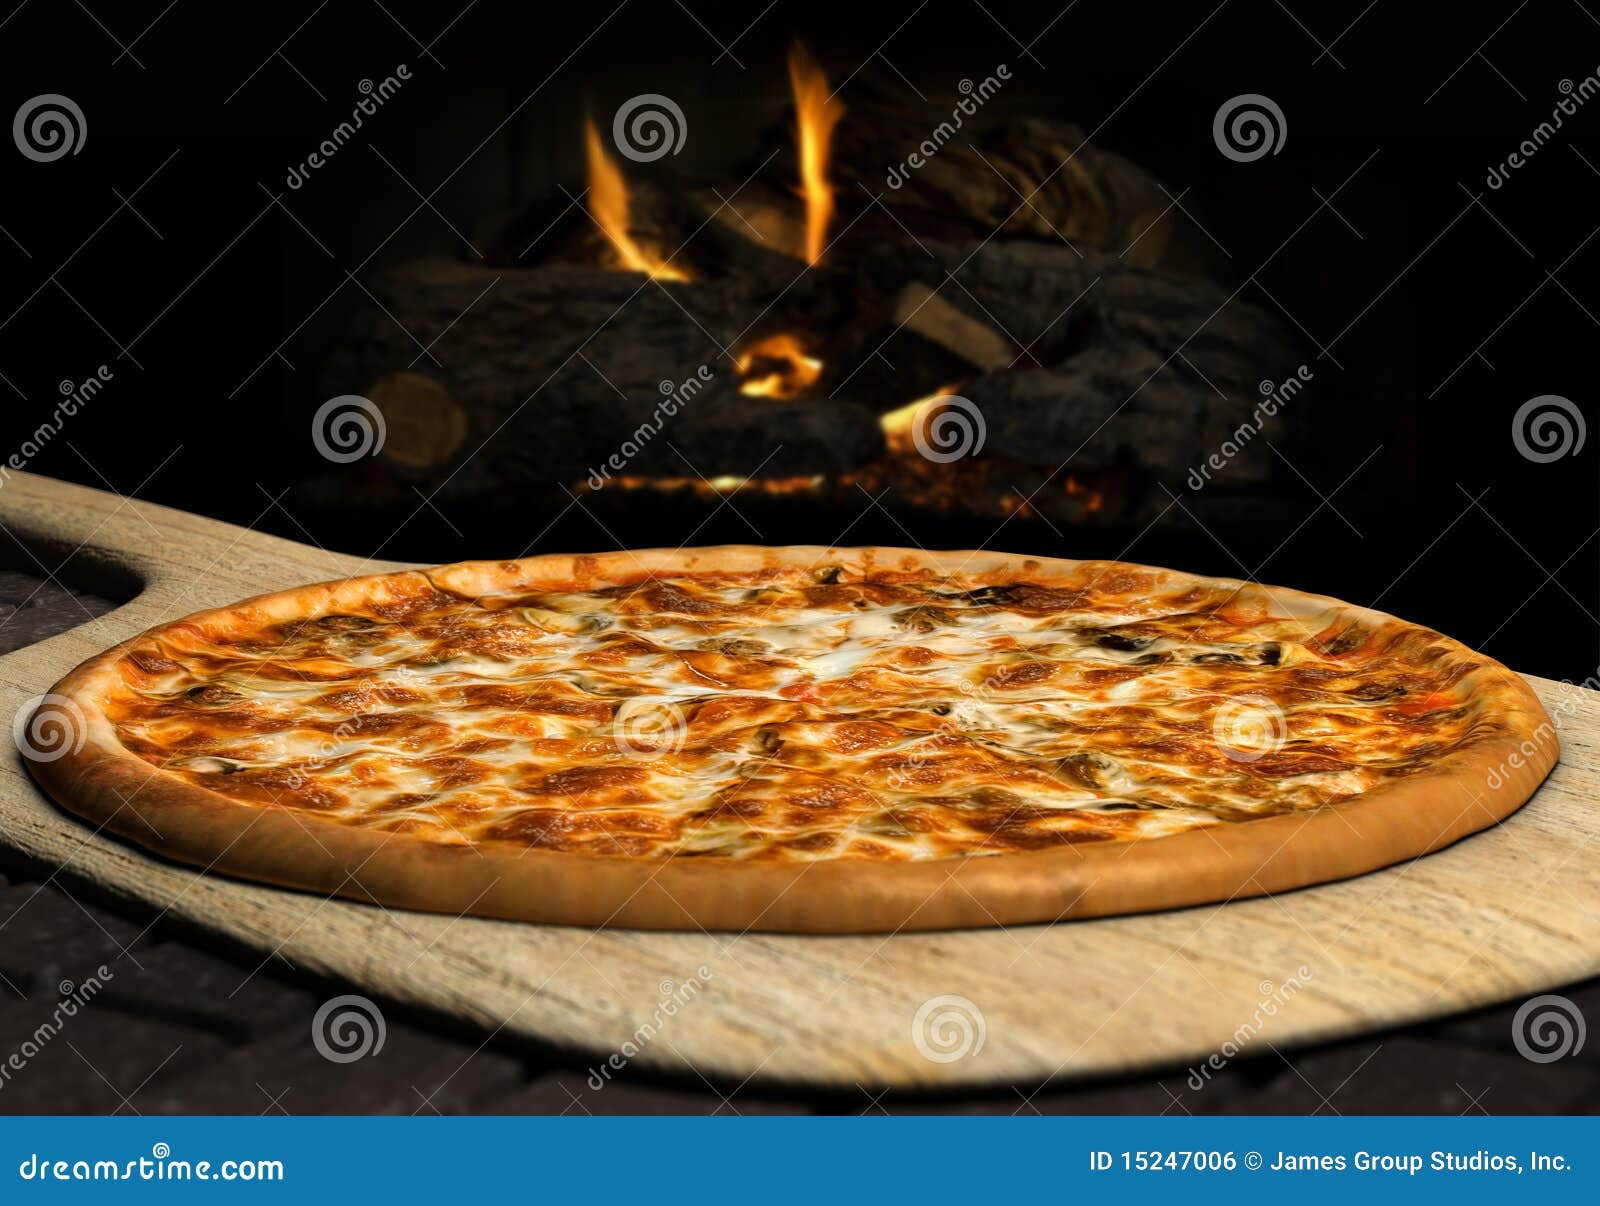 Pizza resting on a pizza peel near an open fire.